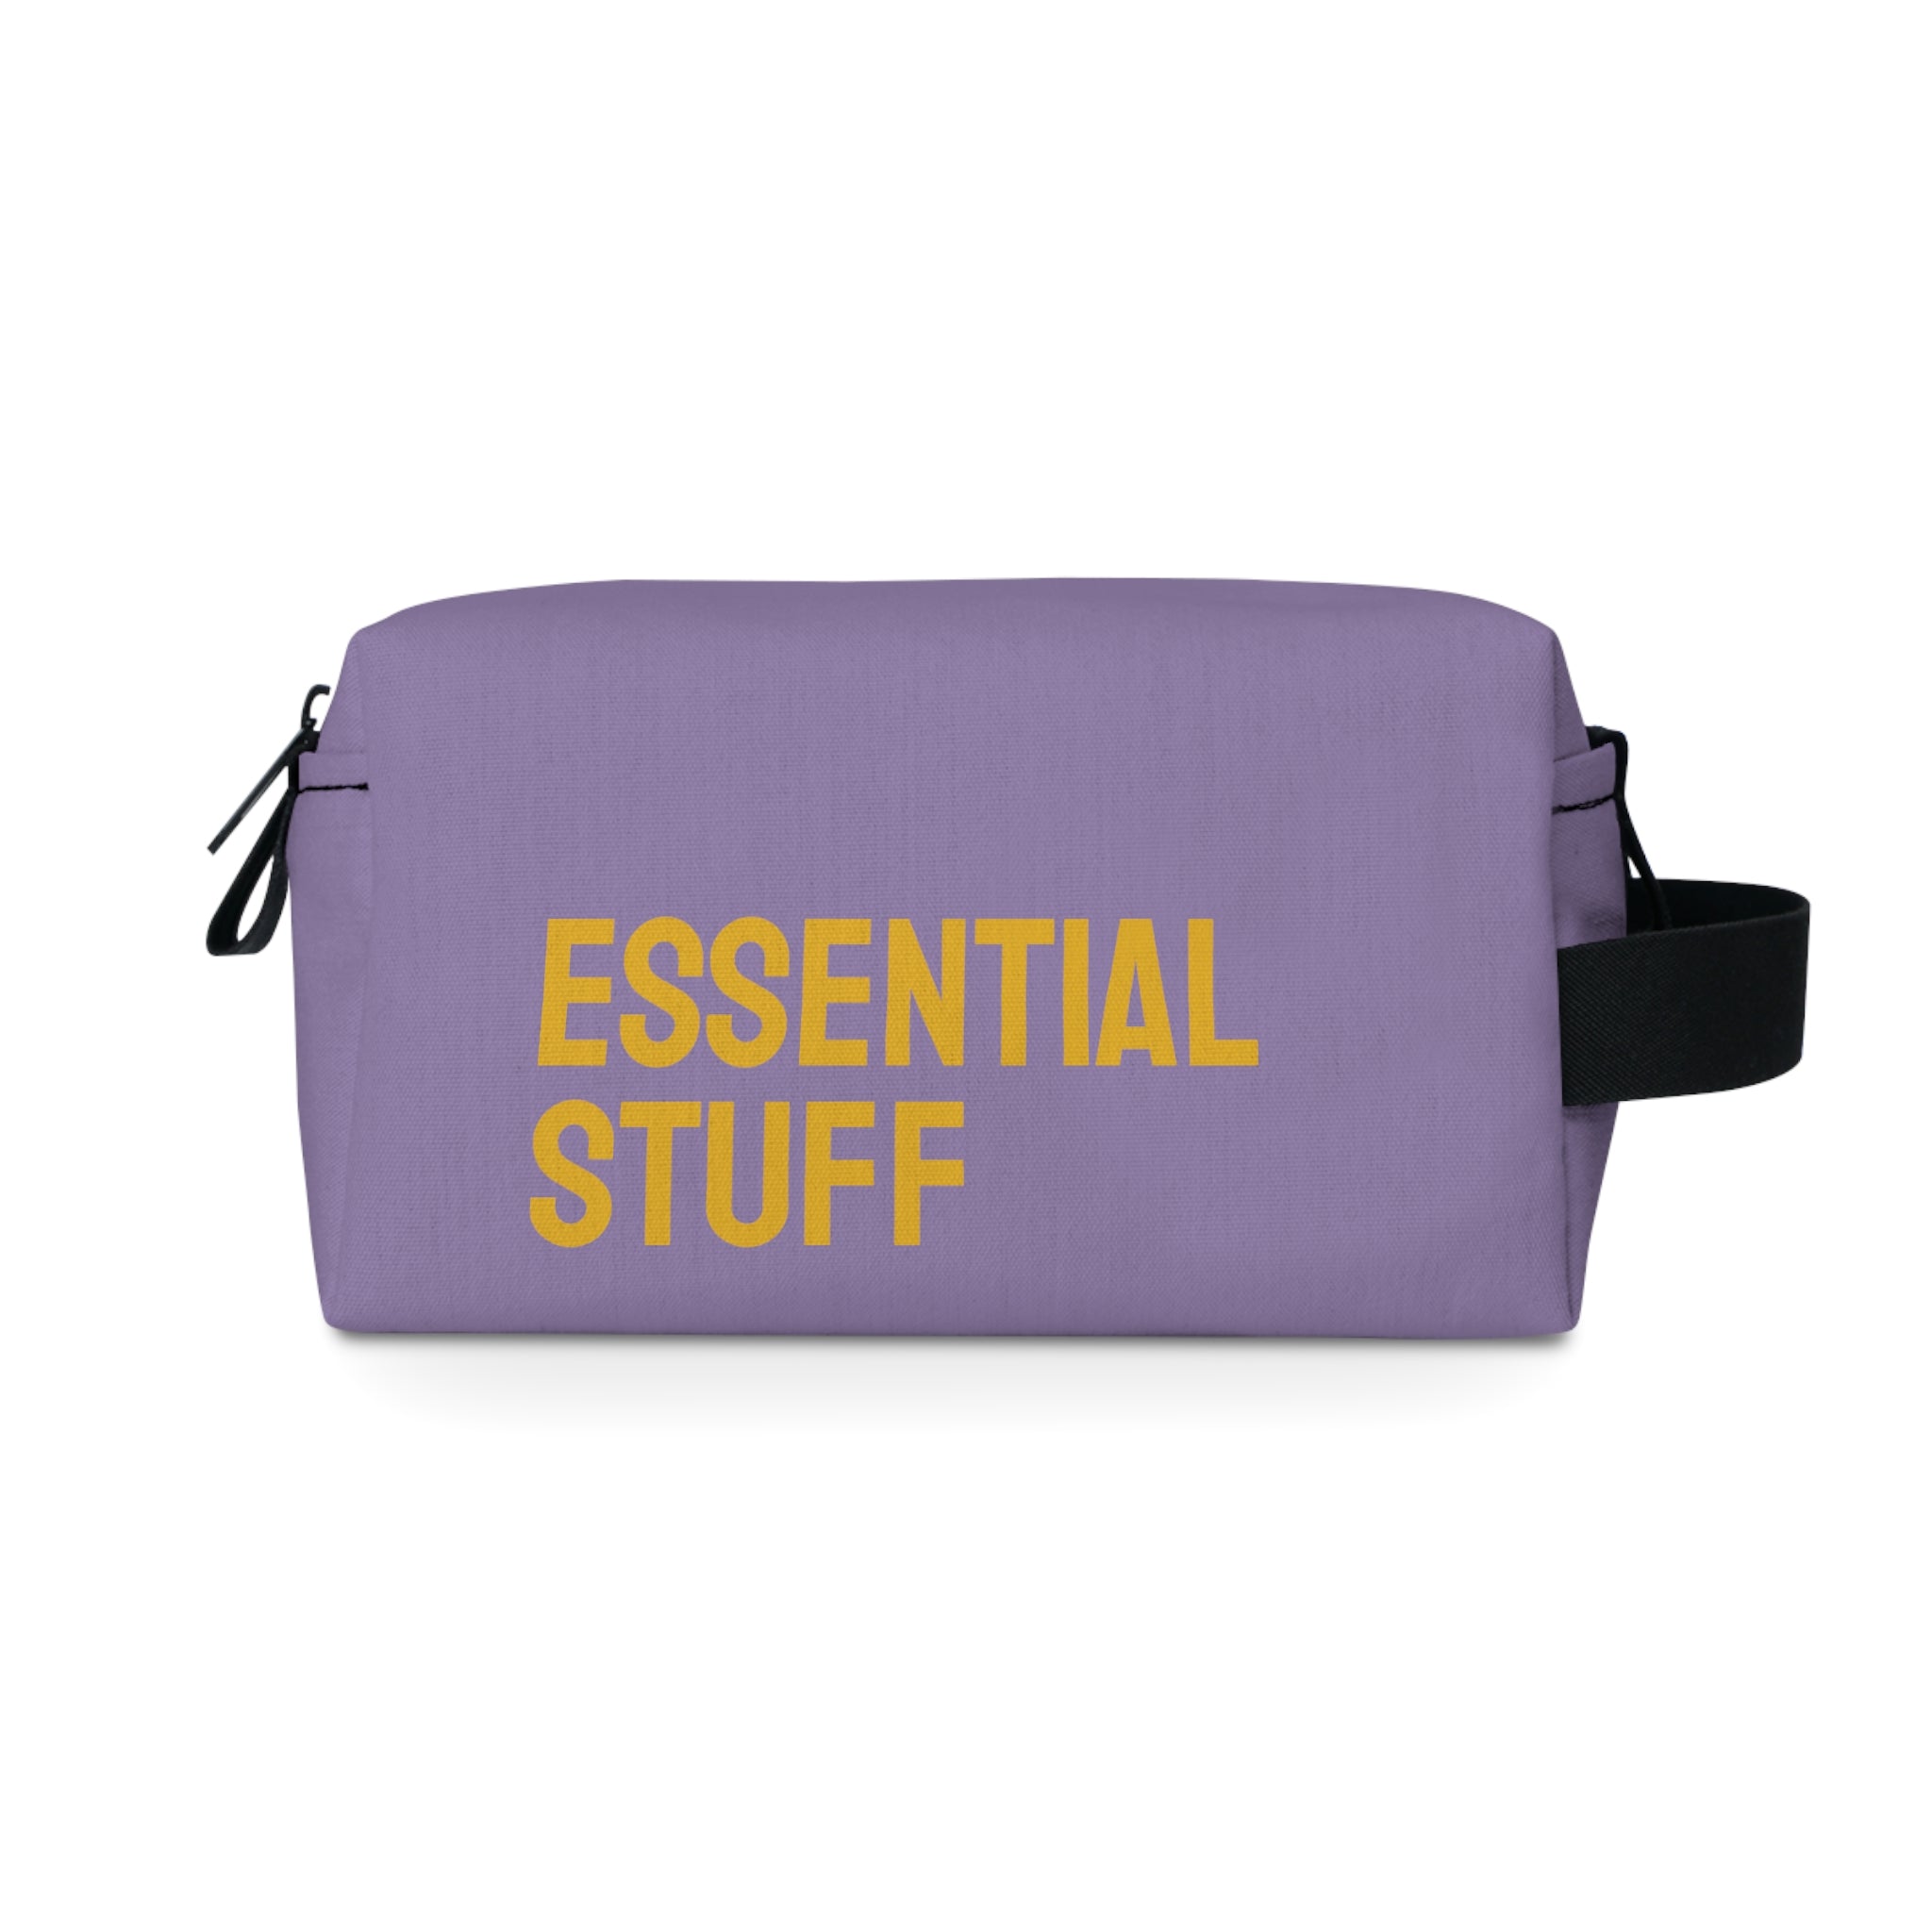 Essential stuff Toiletry Pouch (Purple)